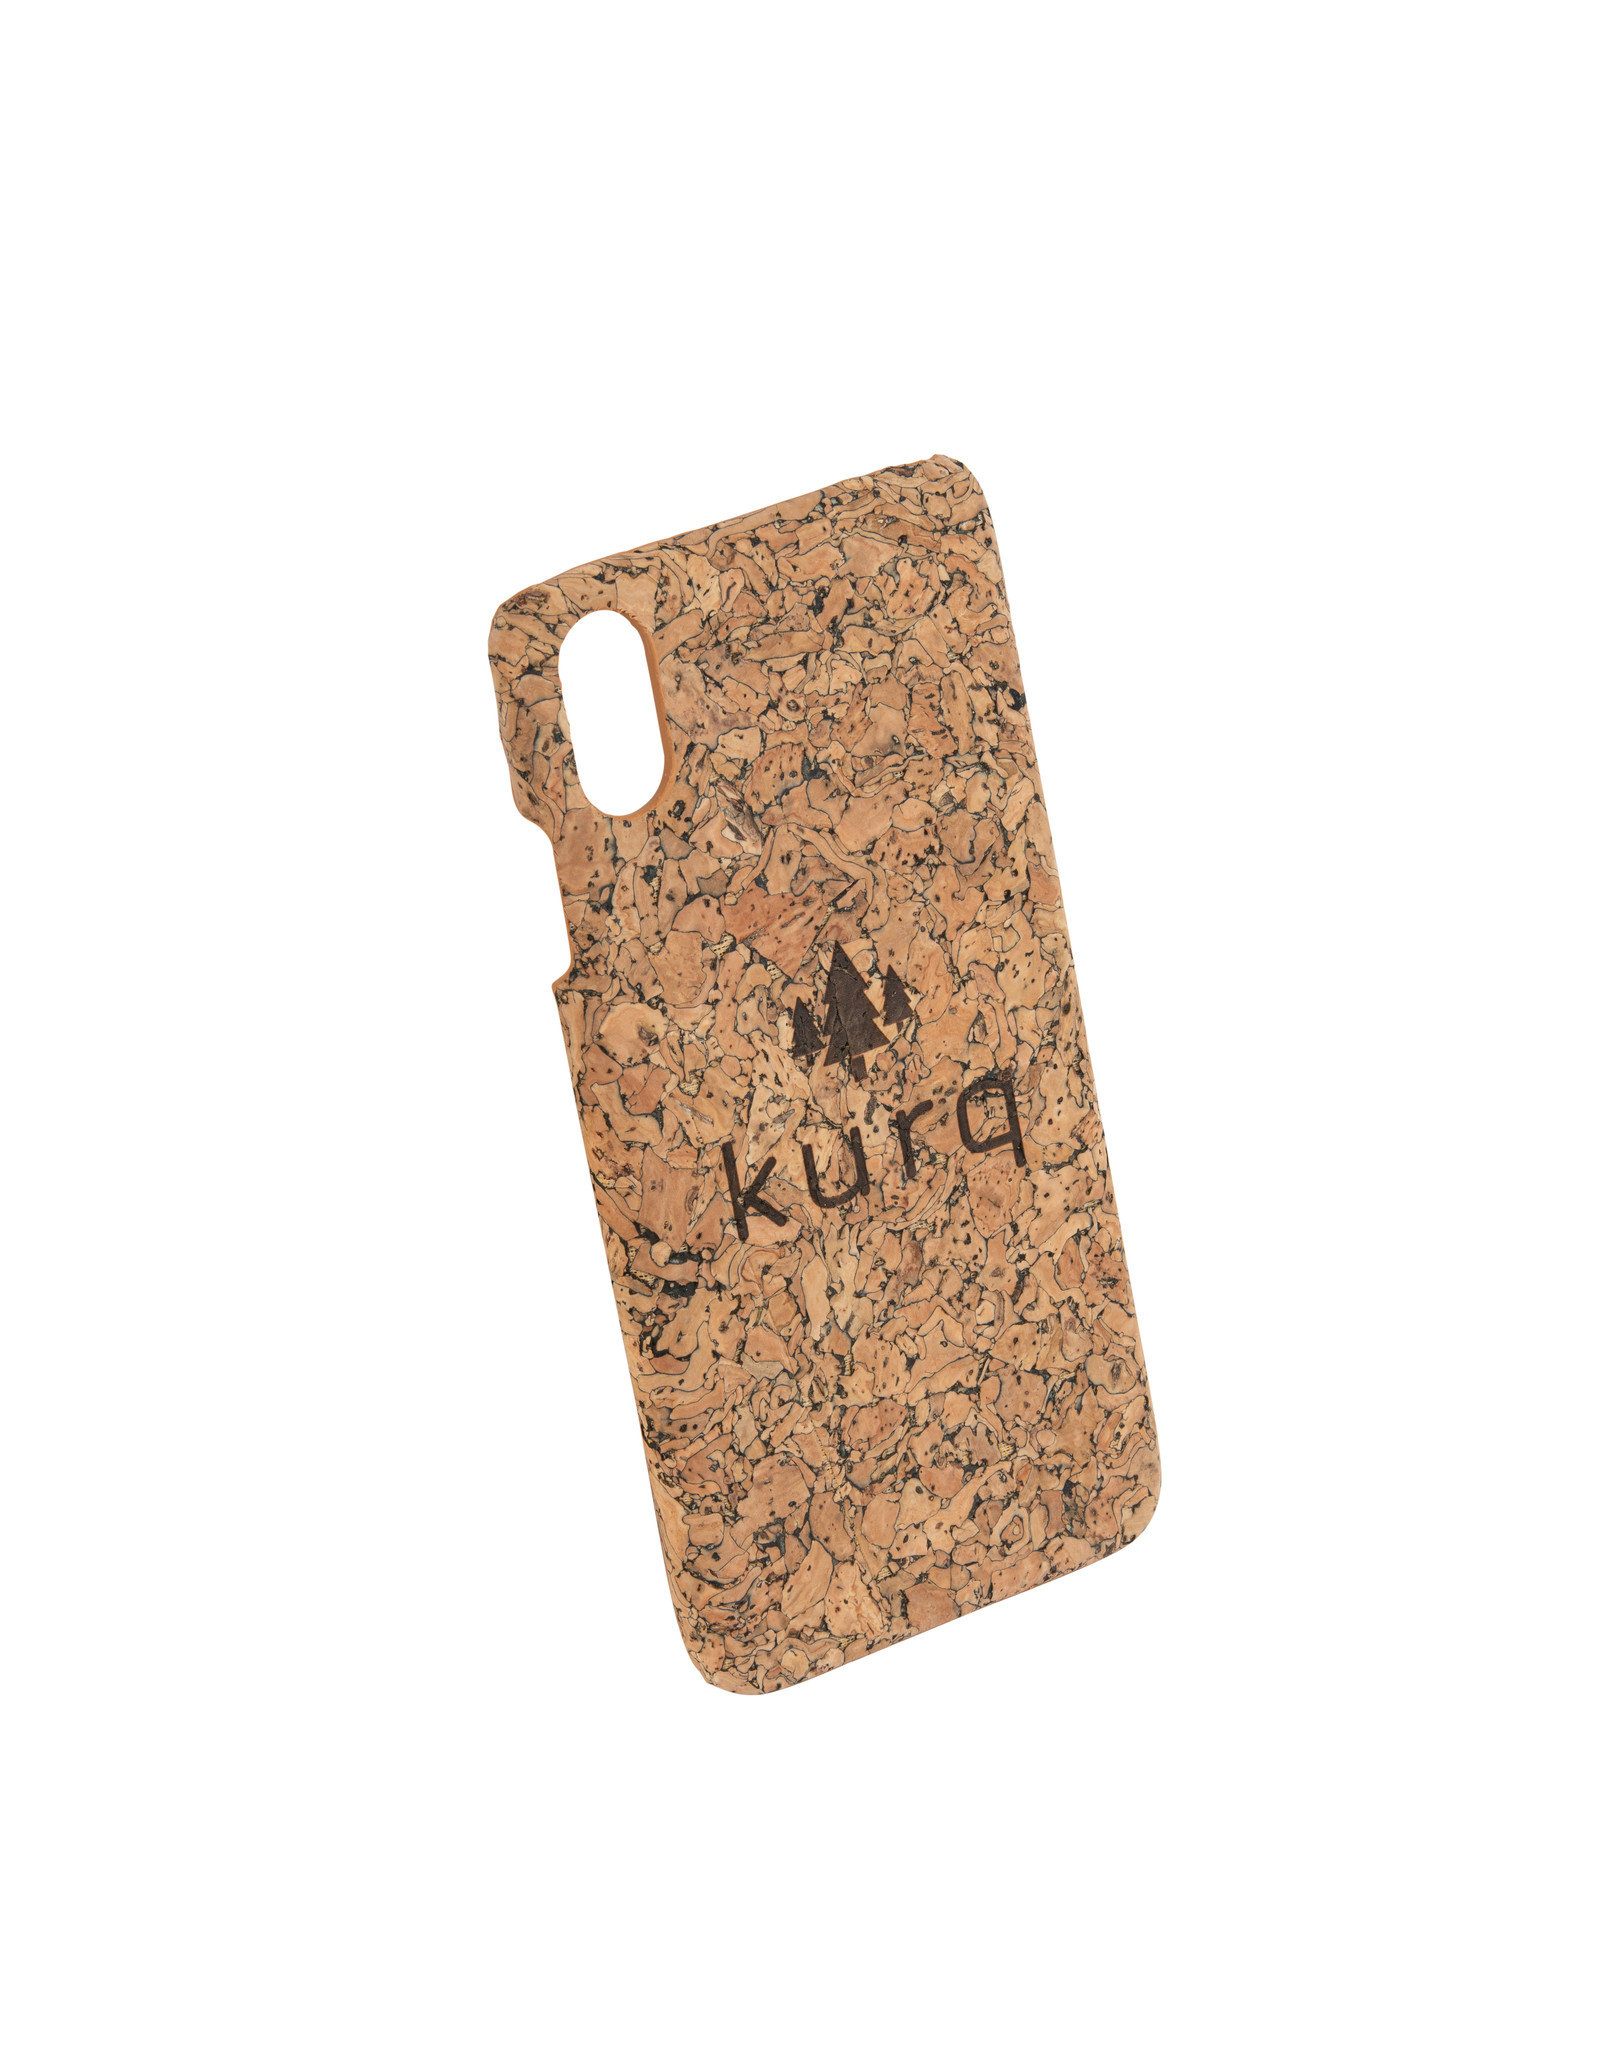 KURQ - Cork phone case for iPhone XS Max